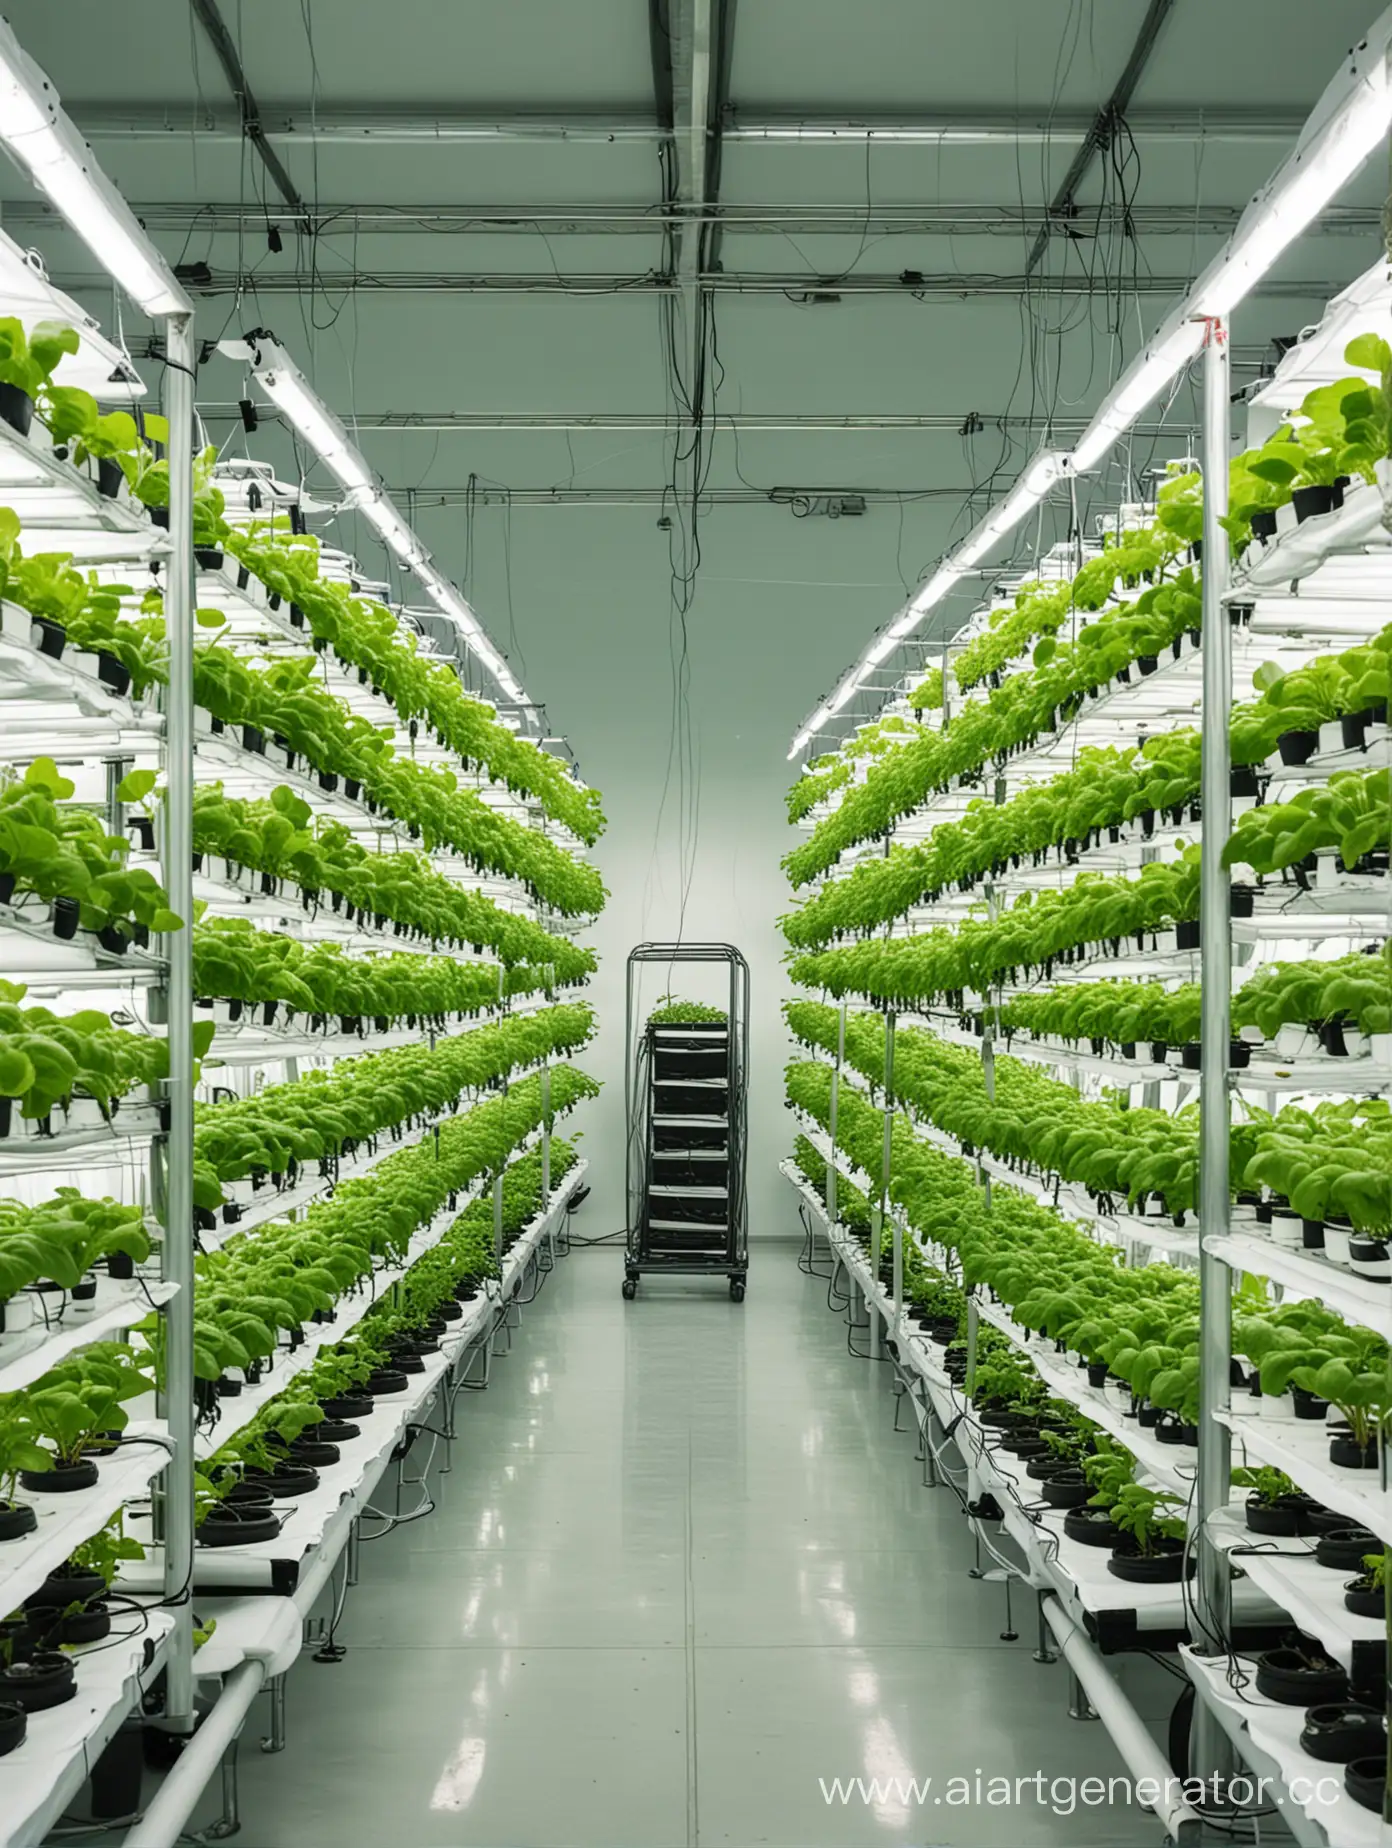 Vibrant-Green-Aeroponics-Farm-Sustainable-Agriculture-in-Illuminated-Setting